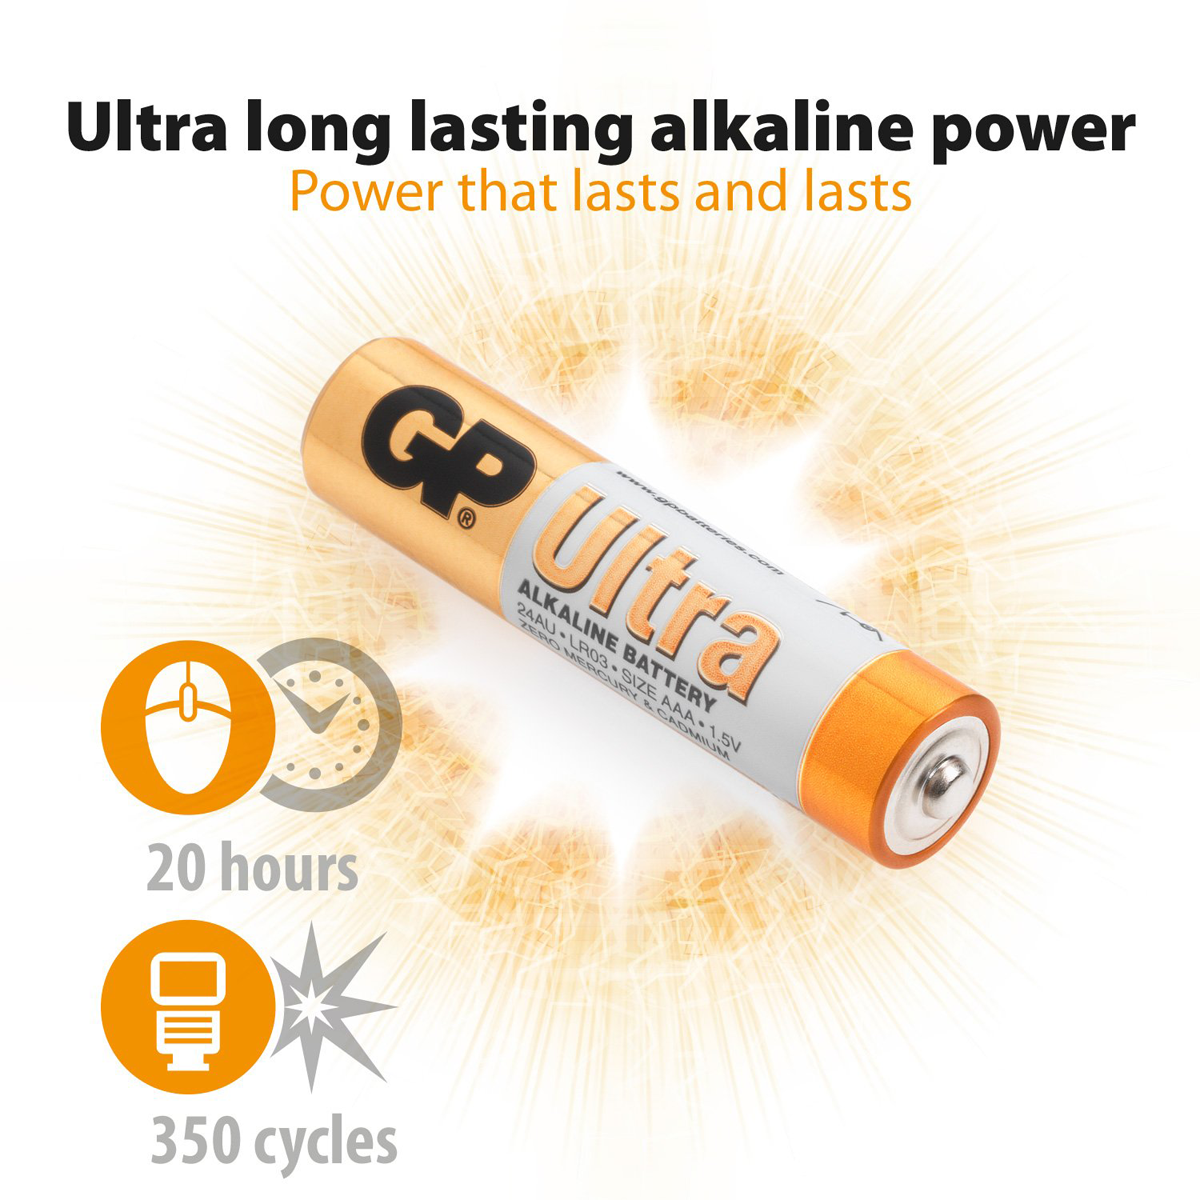 GP Ultra 4+2 x AAA Batteries